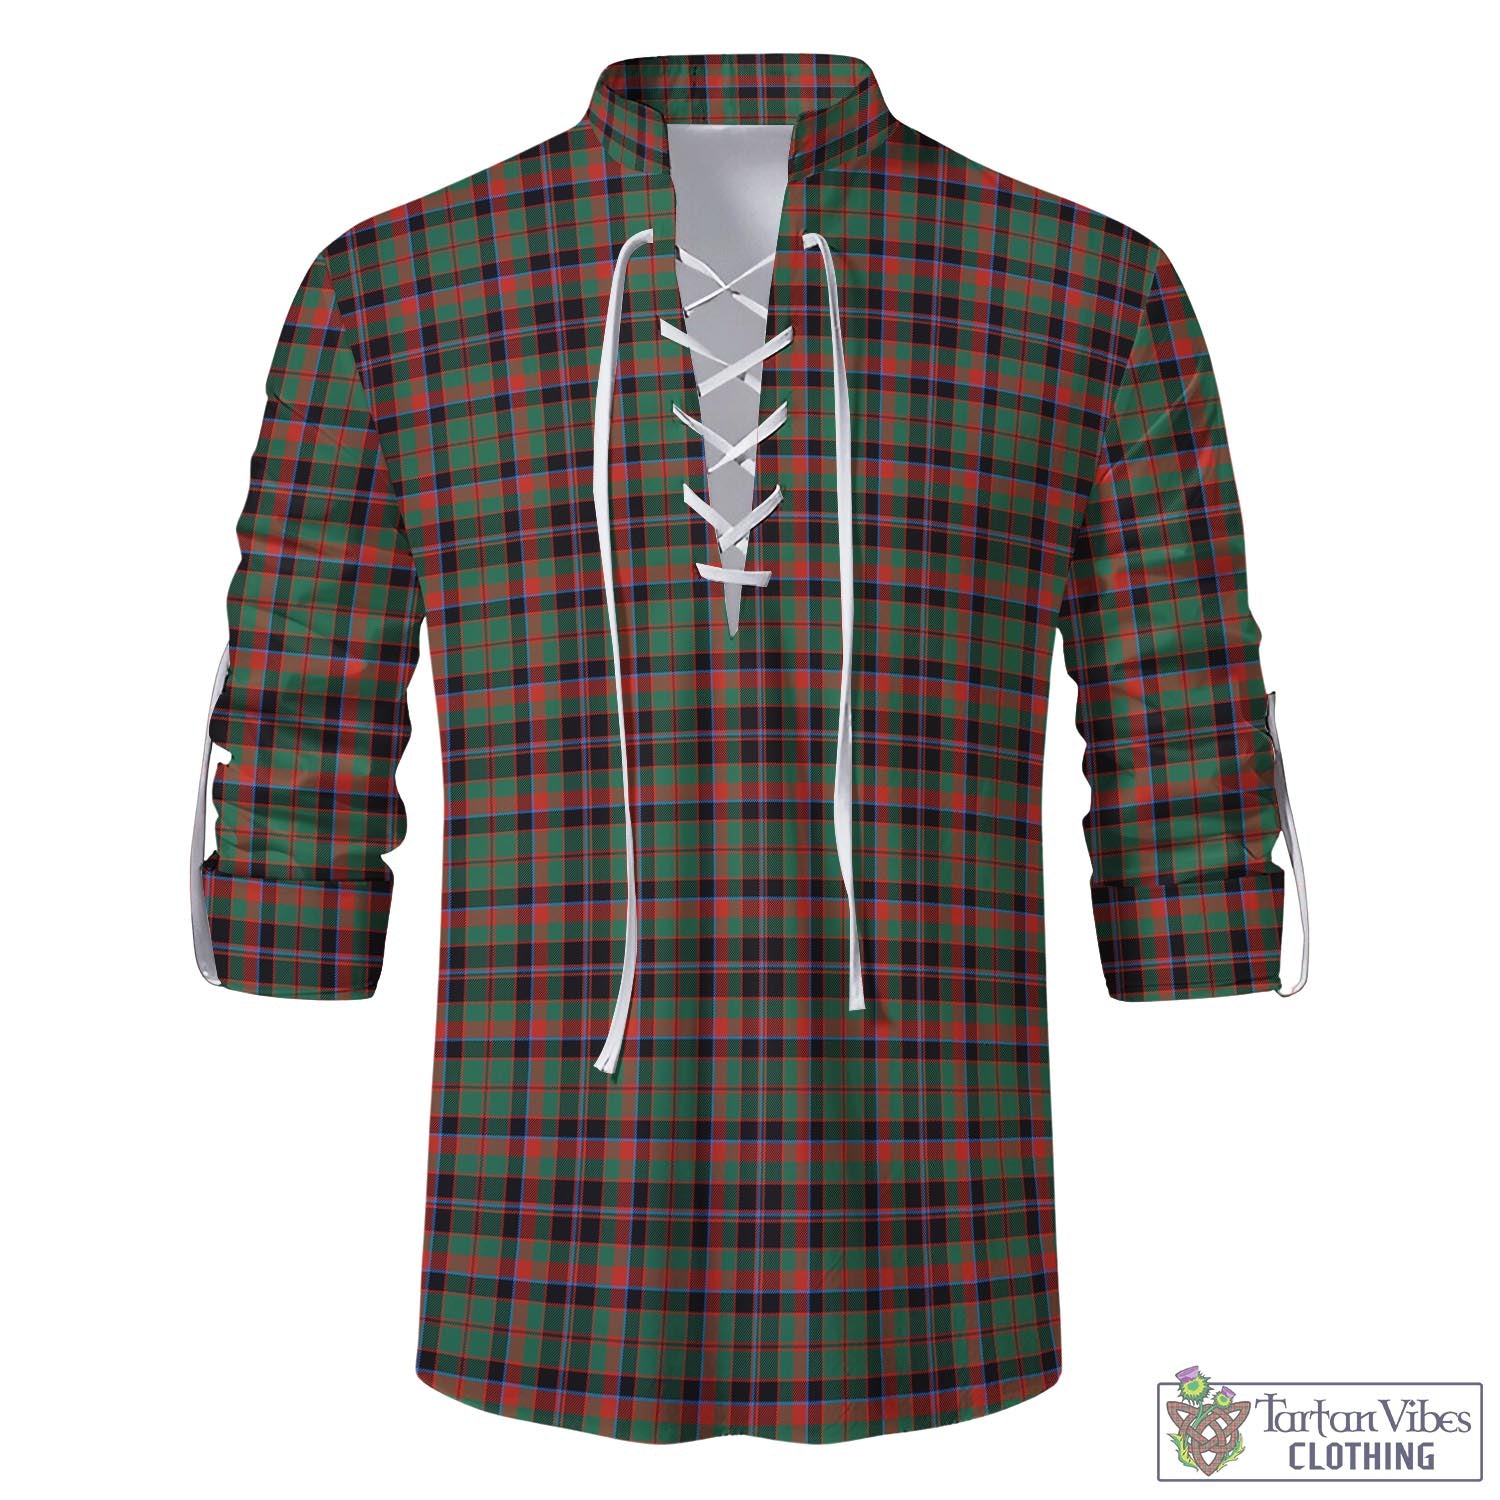 Tartan Vibes Clothing Cumming Hunting Ancient Tartan Men's Scottish Traditional Jacobite Ghillie Kilt Shirt